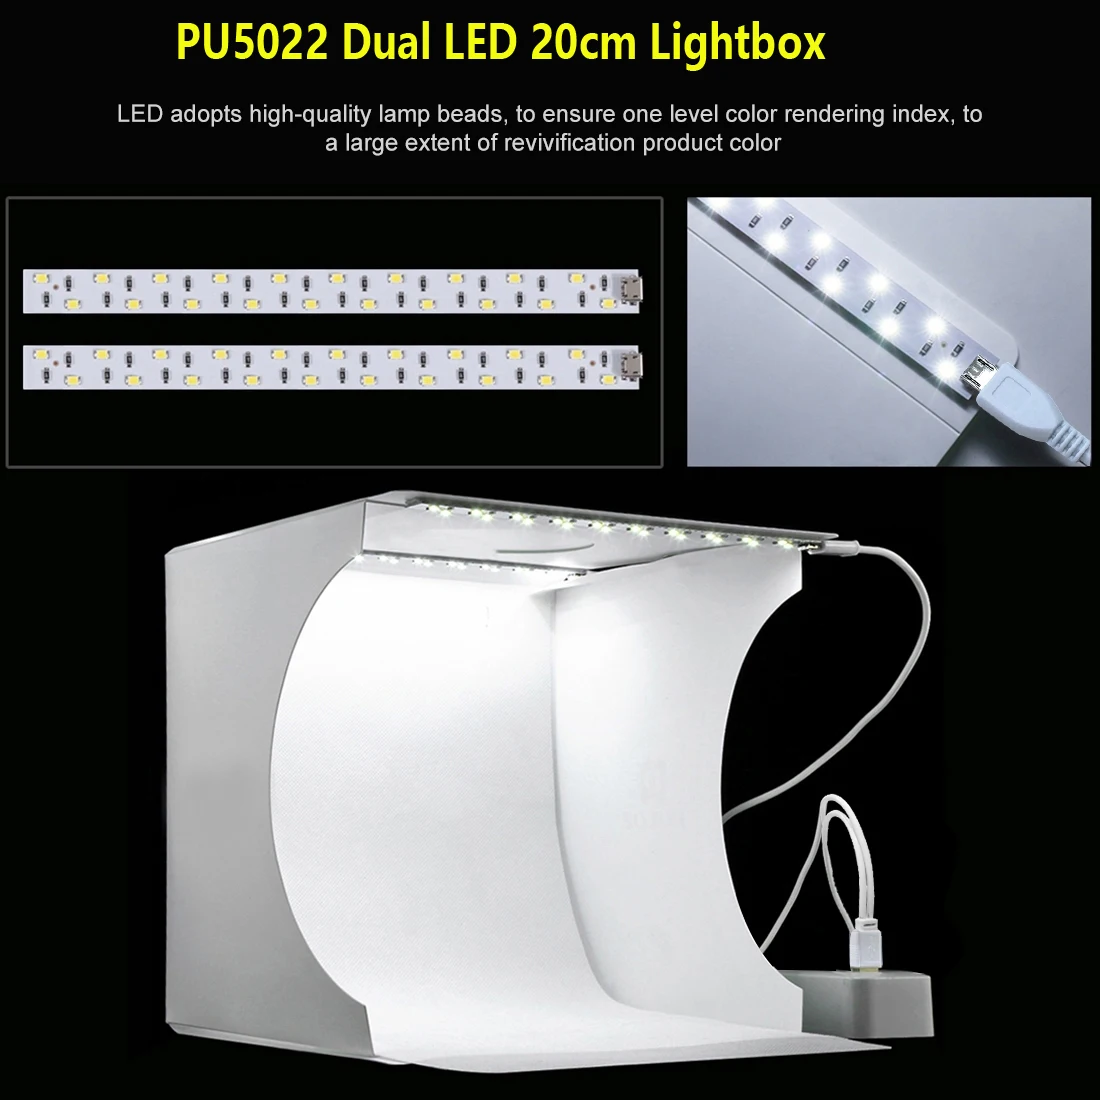 20cm Dual LED